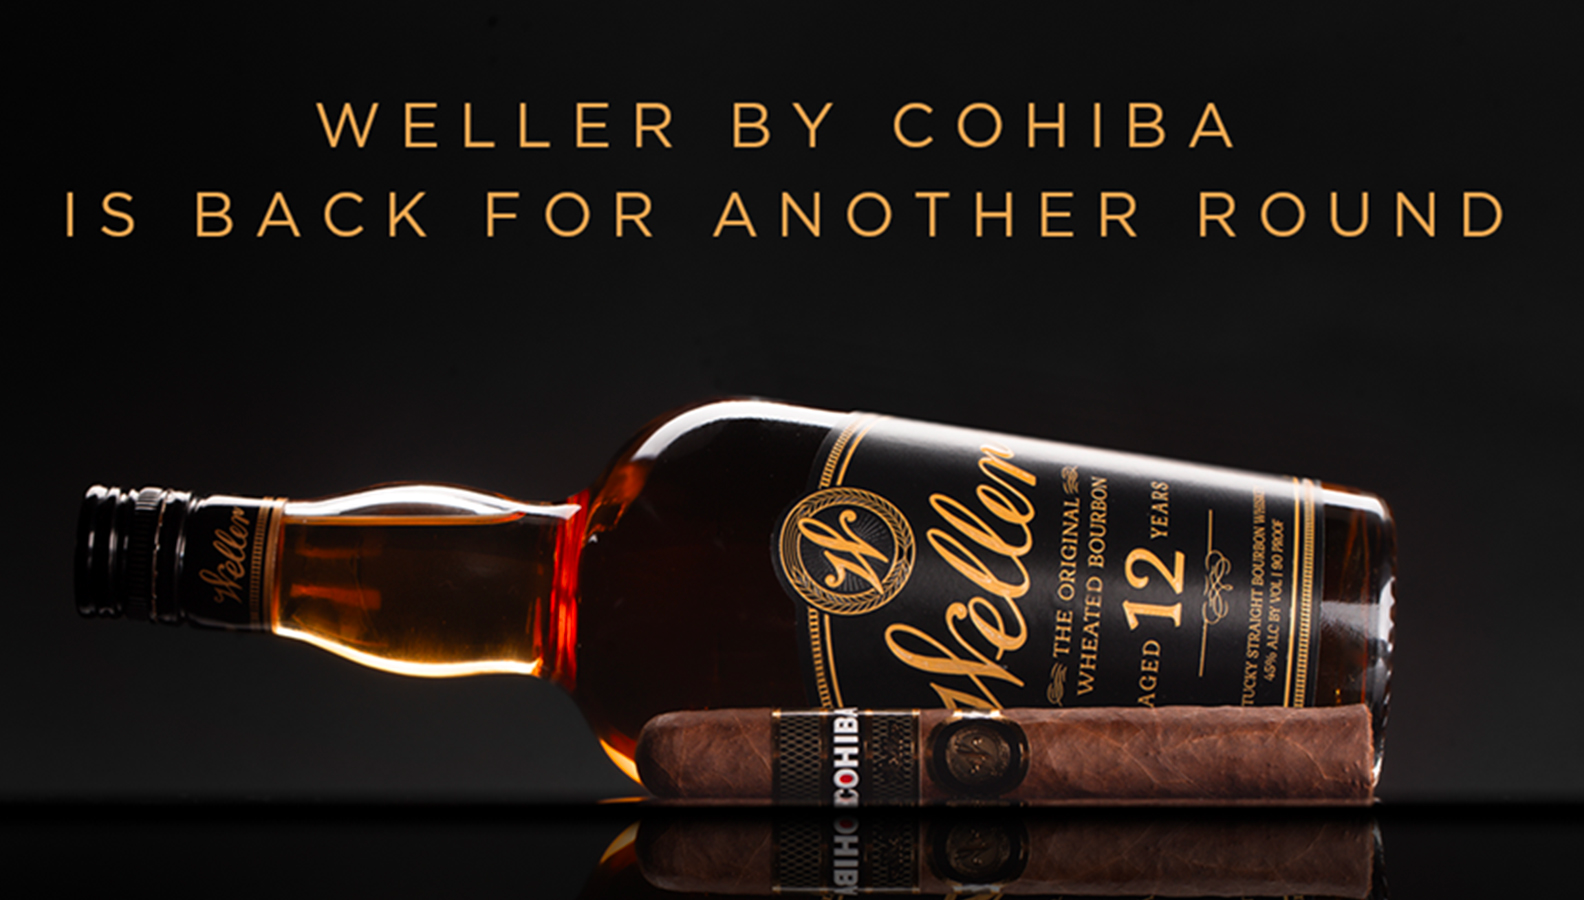 A bottle of Weller Bourbon and a Cohiba cigar